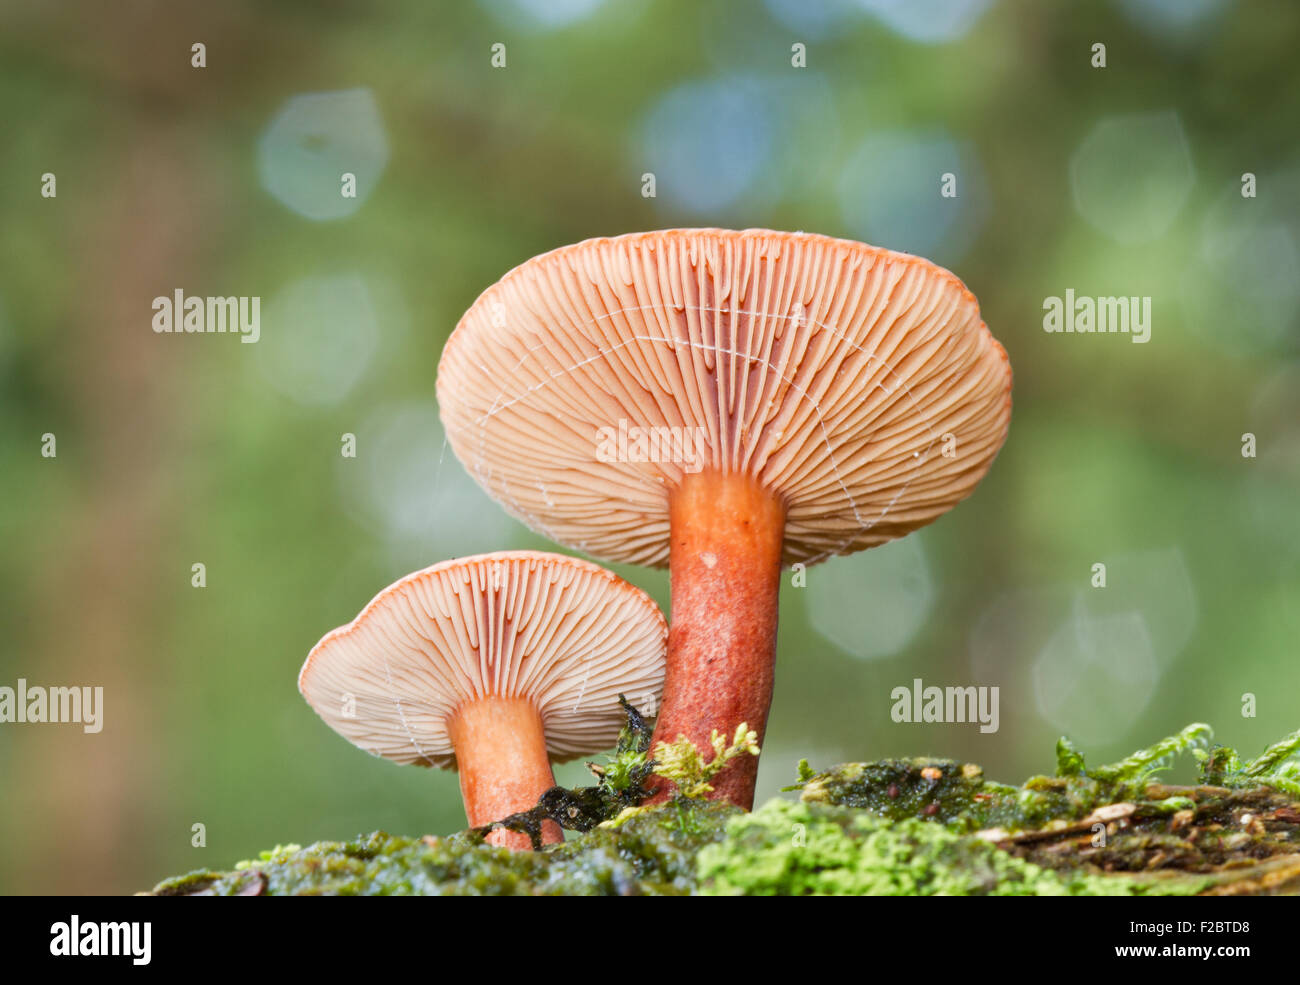 Two mushrooms, probably Milk cap species  (Lactarius), on rotting wood Stock Photo